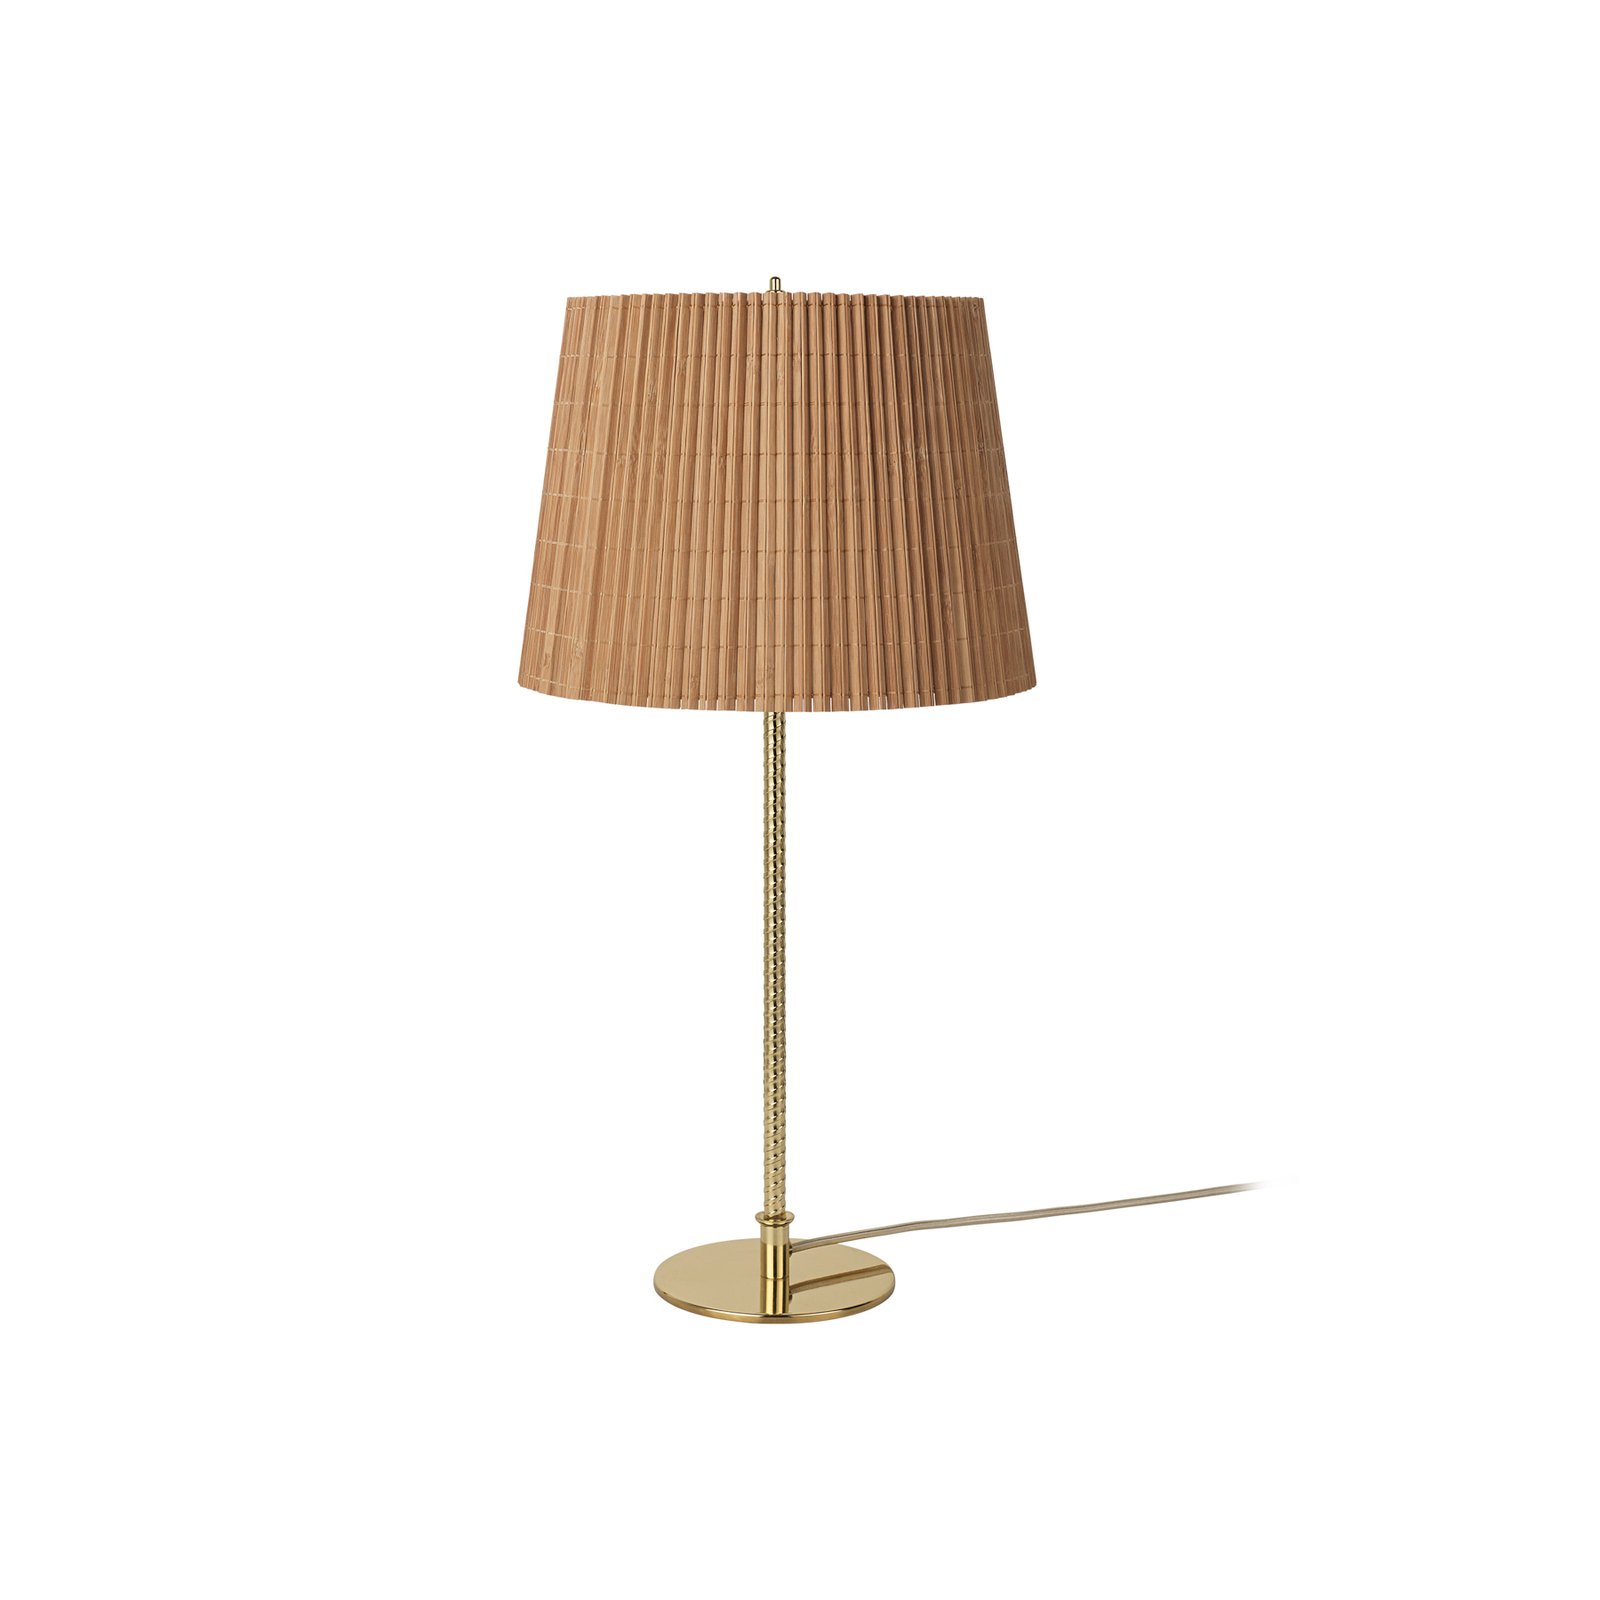 GUBI bordlampe 9205, messing, bambusskærm, højde 58 cm